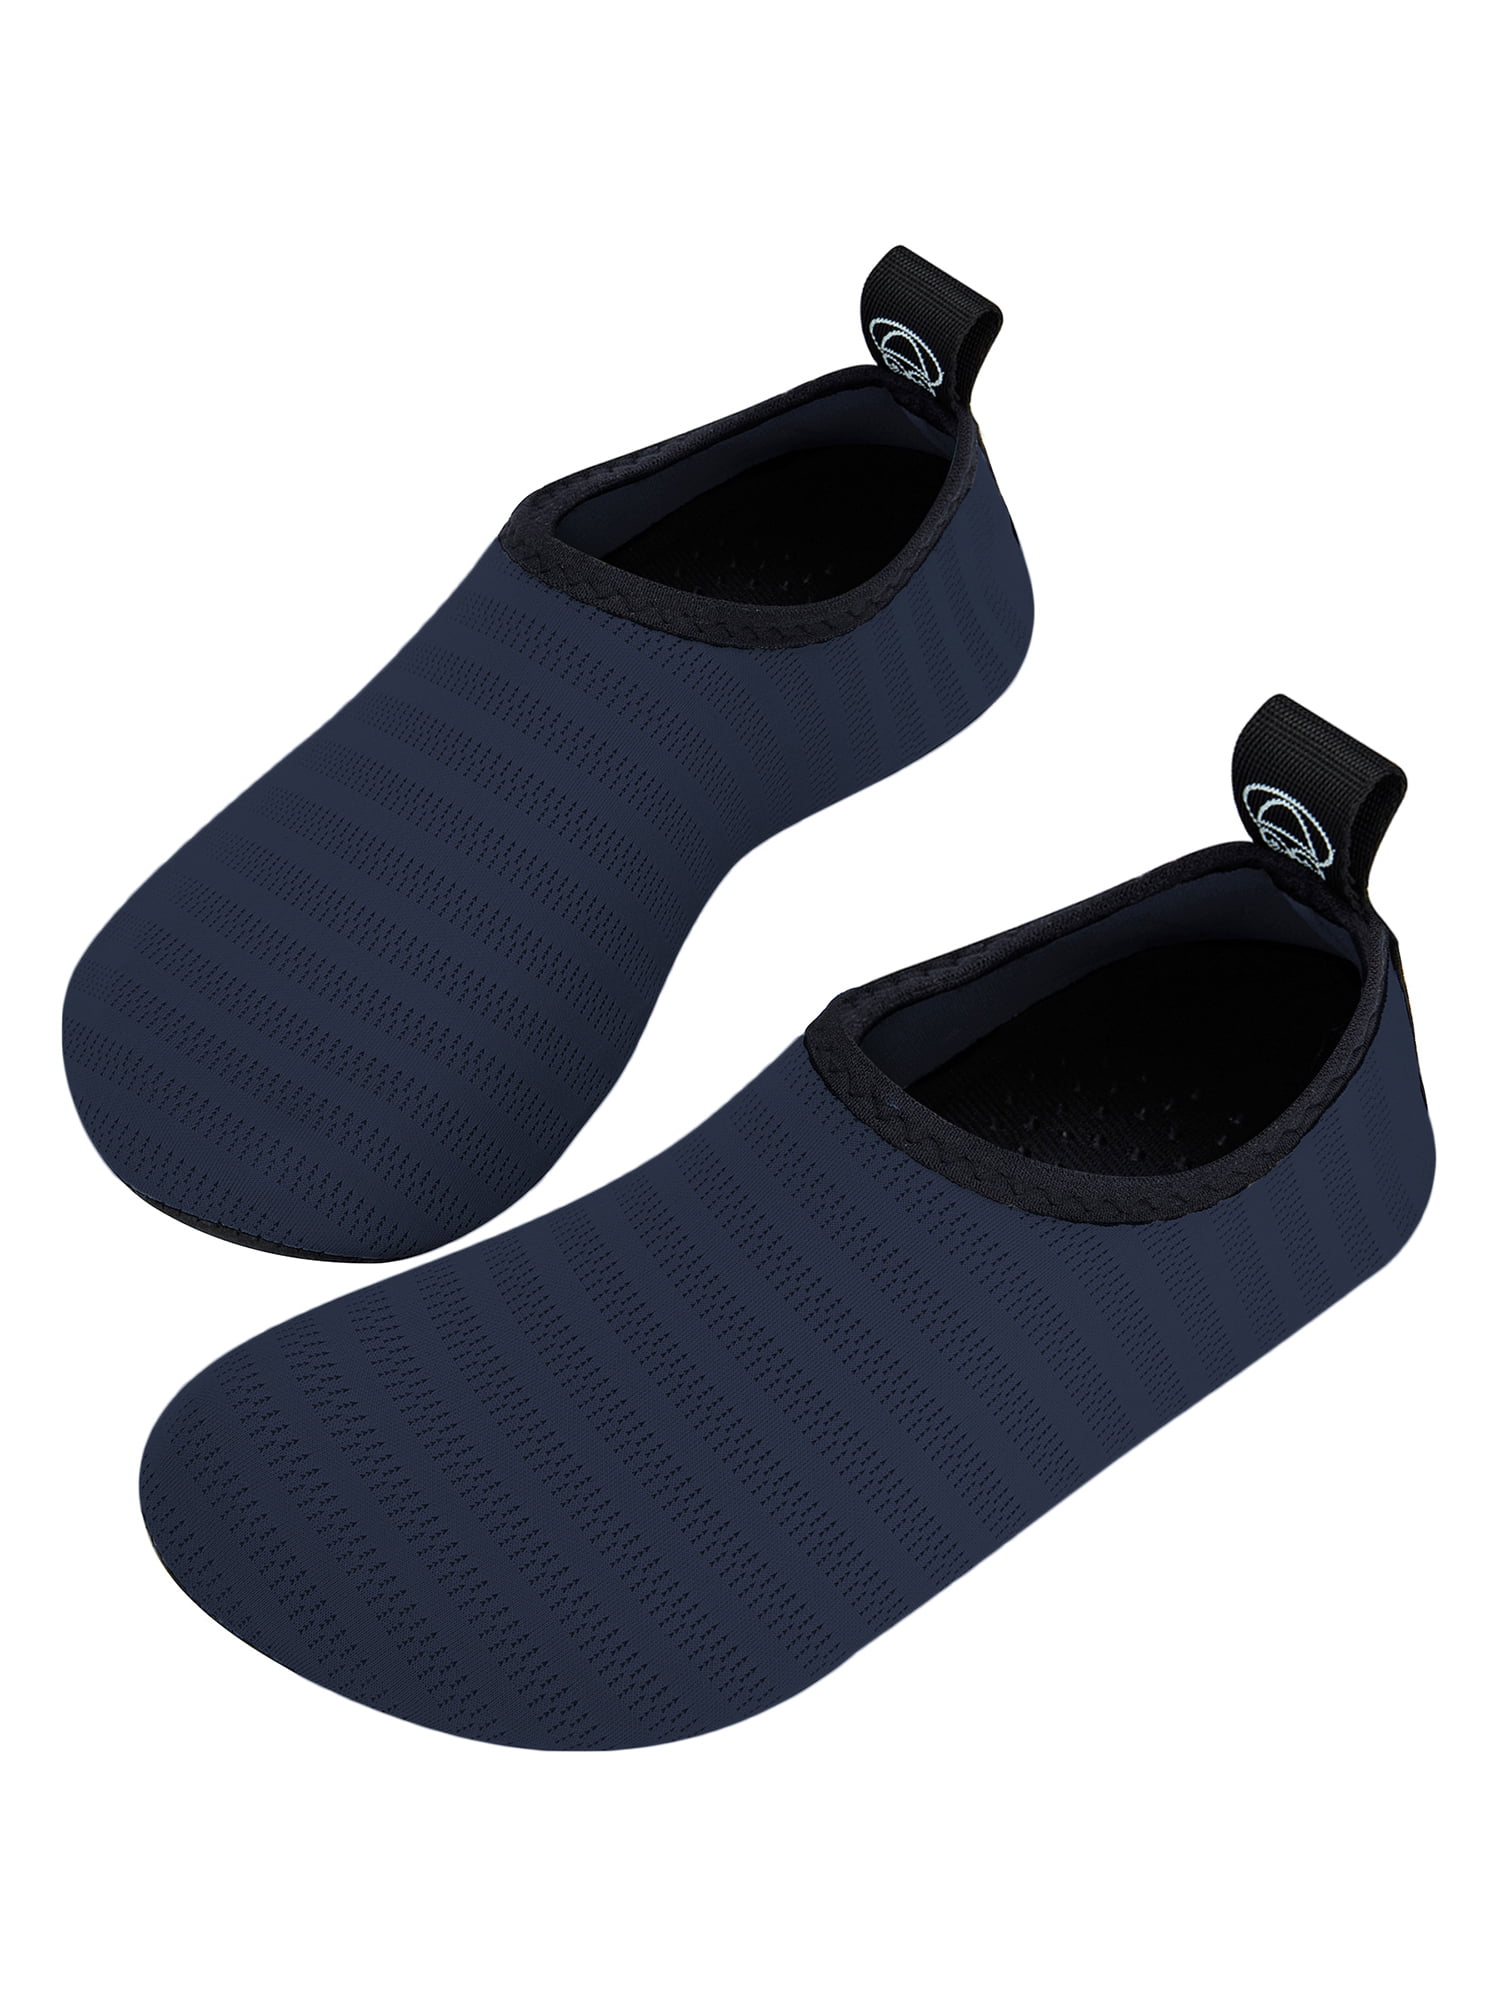 DL Water Shoes for Women and Men Barefoot Quick-Dry Aqua Socks Slip-on for Beach Pool Swim Surf Yoga Exercise 